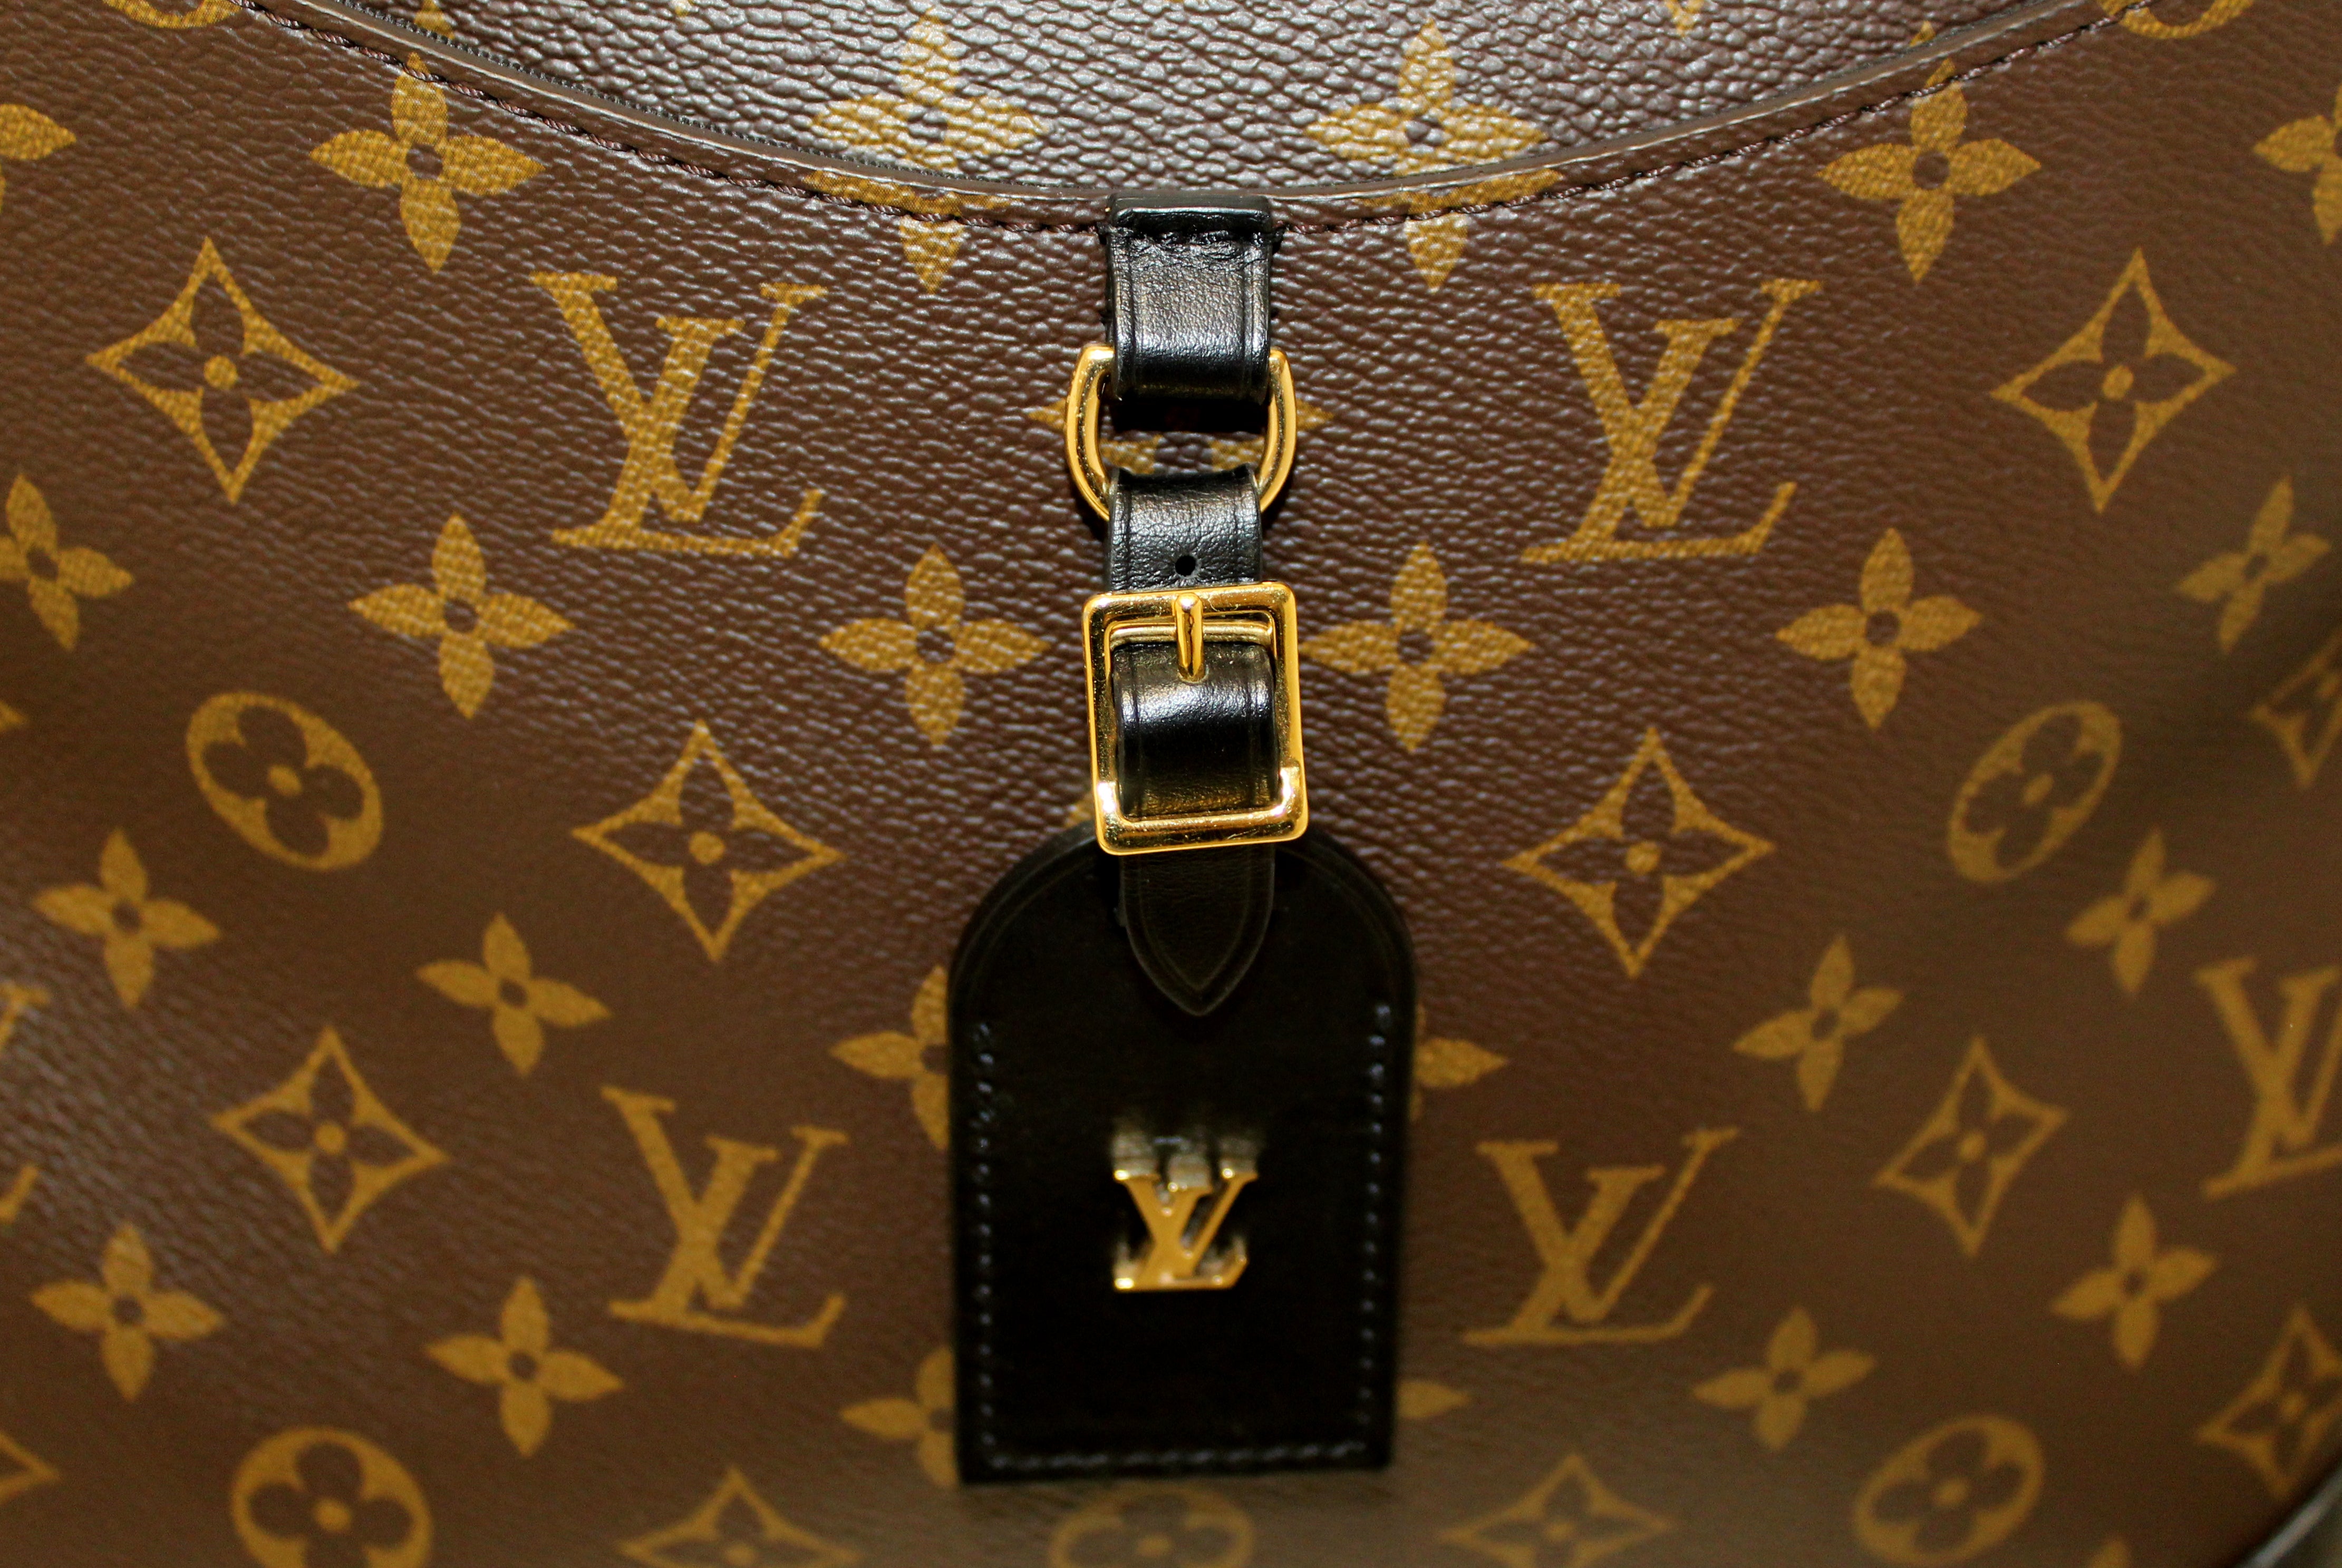 Louis Vuitton Tasche Odeon MM LV Monogram bag gold